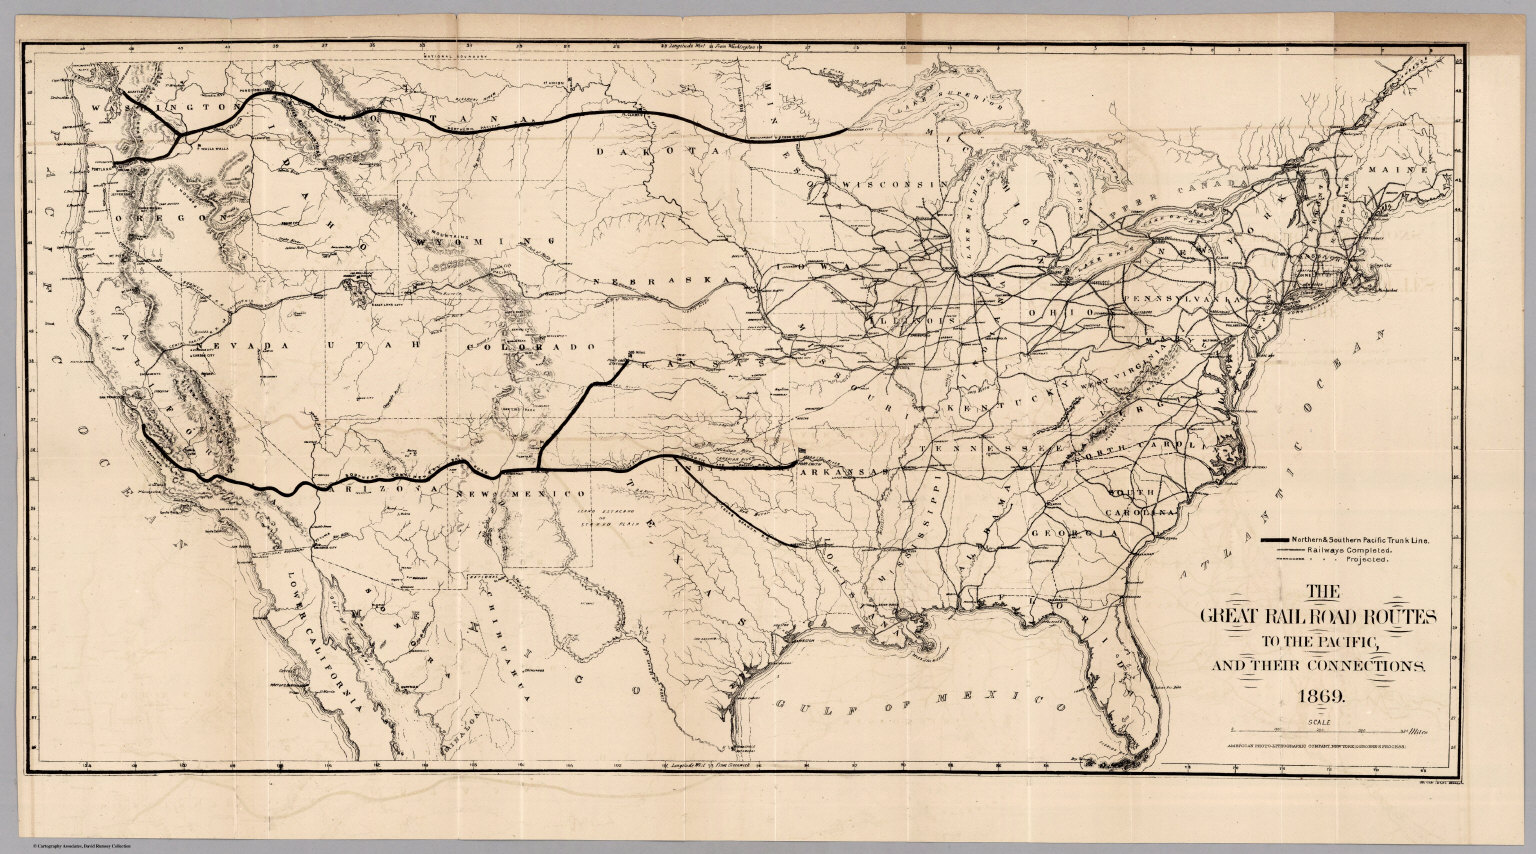 Central Pacific Railroad Route Map